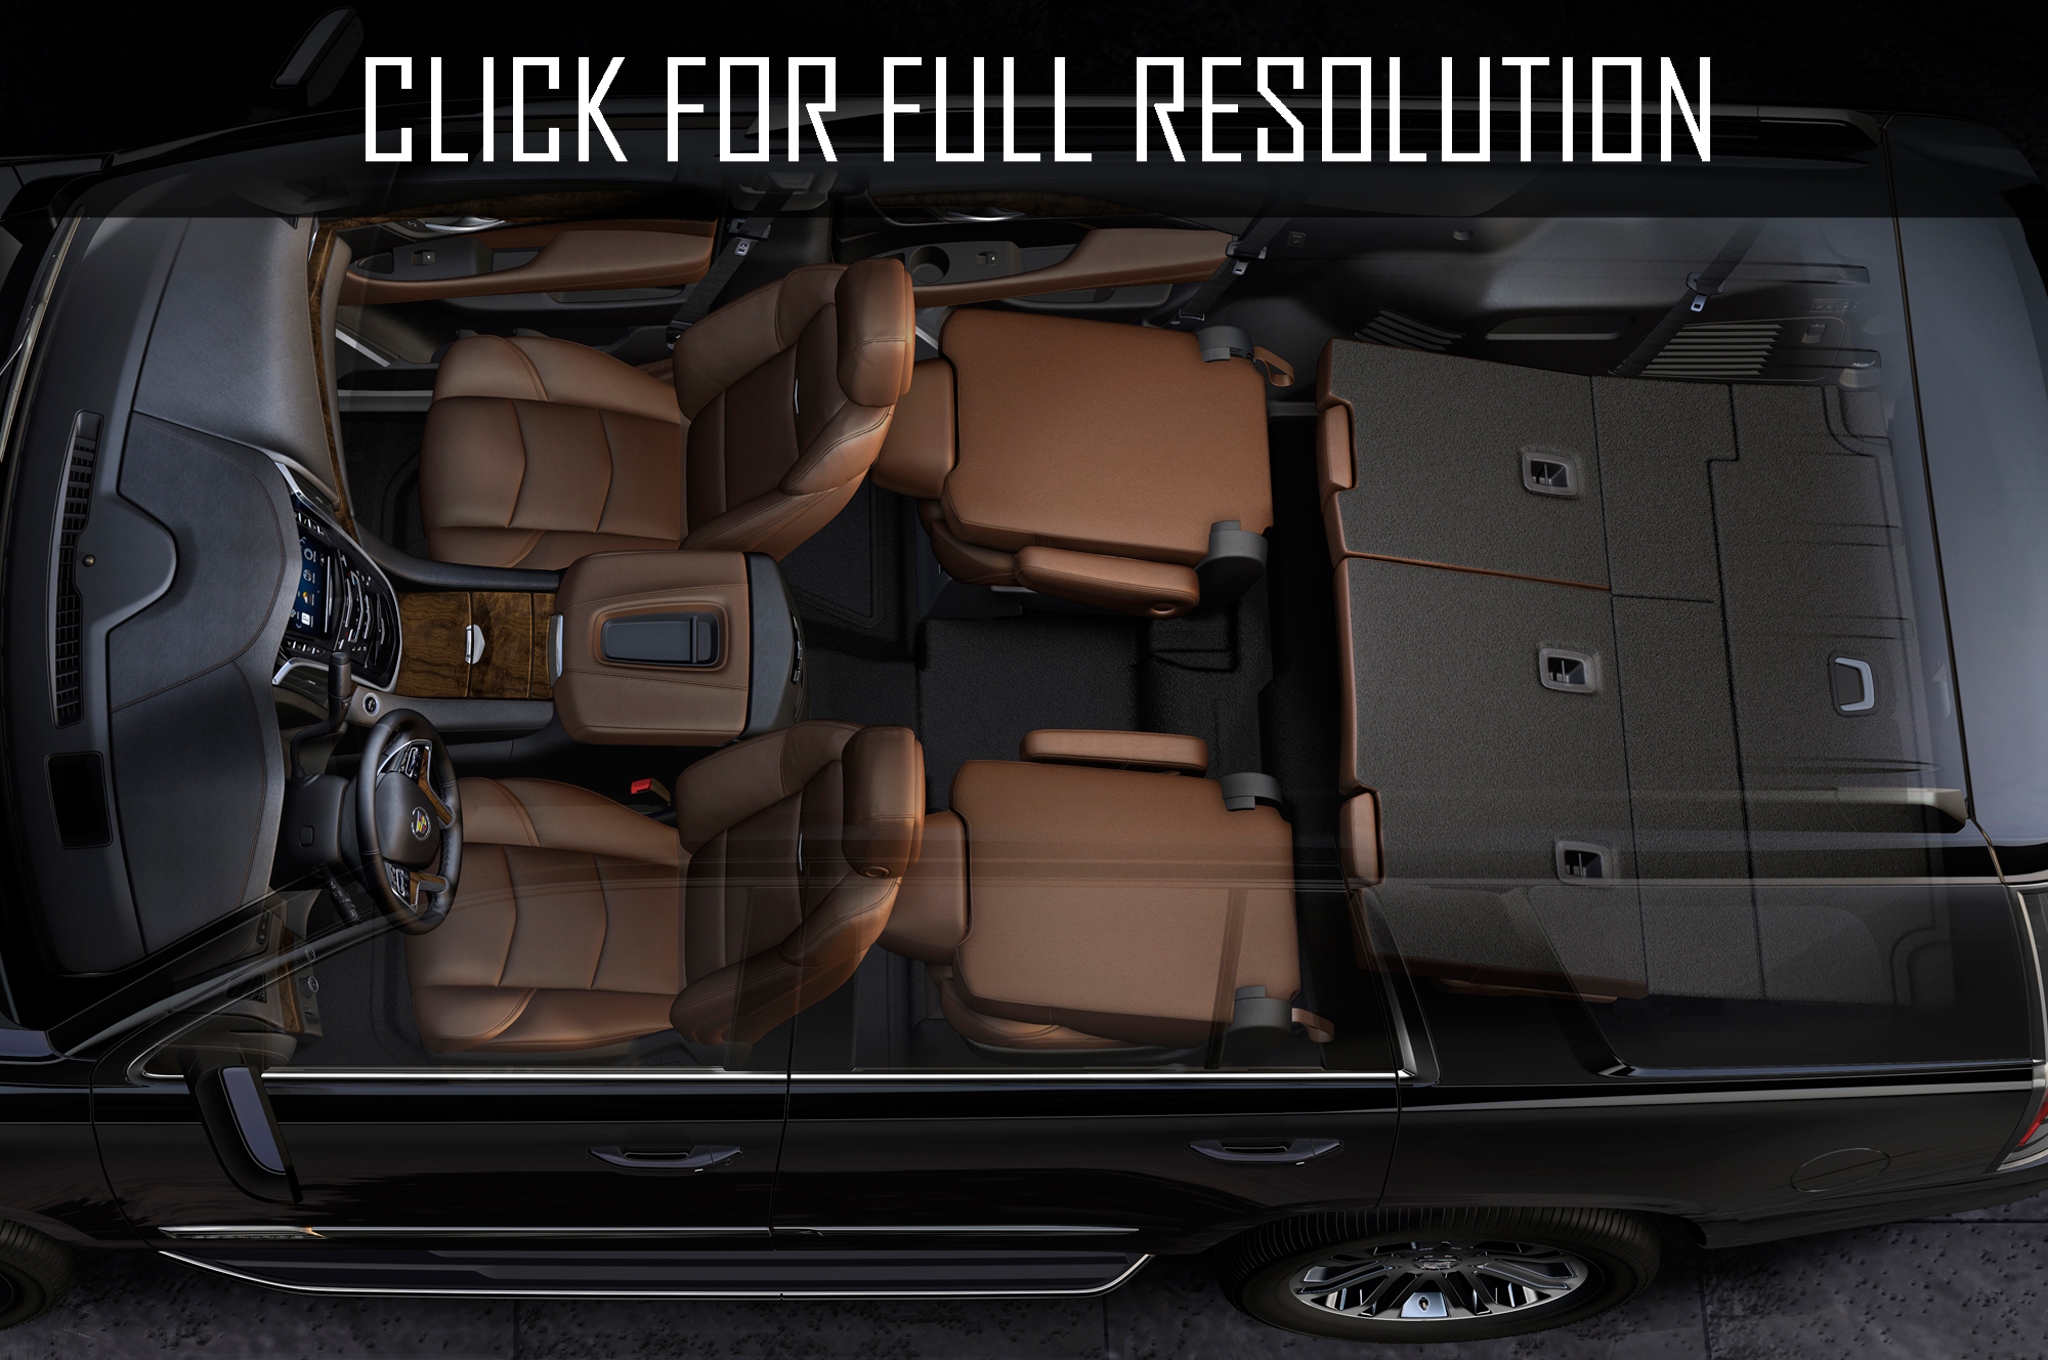 2015 Cadillac Escalade Esv Best Image Gallery 12 17 Share